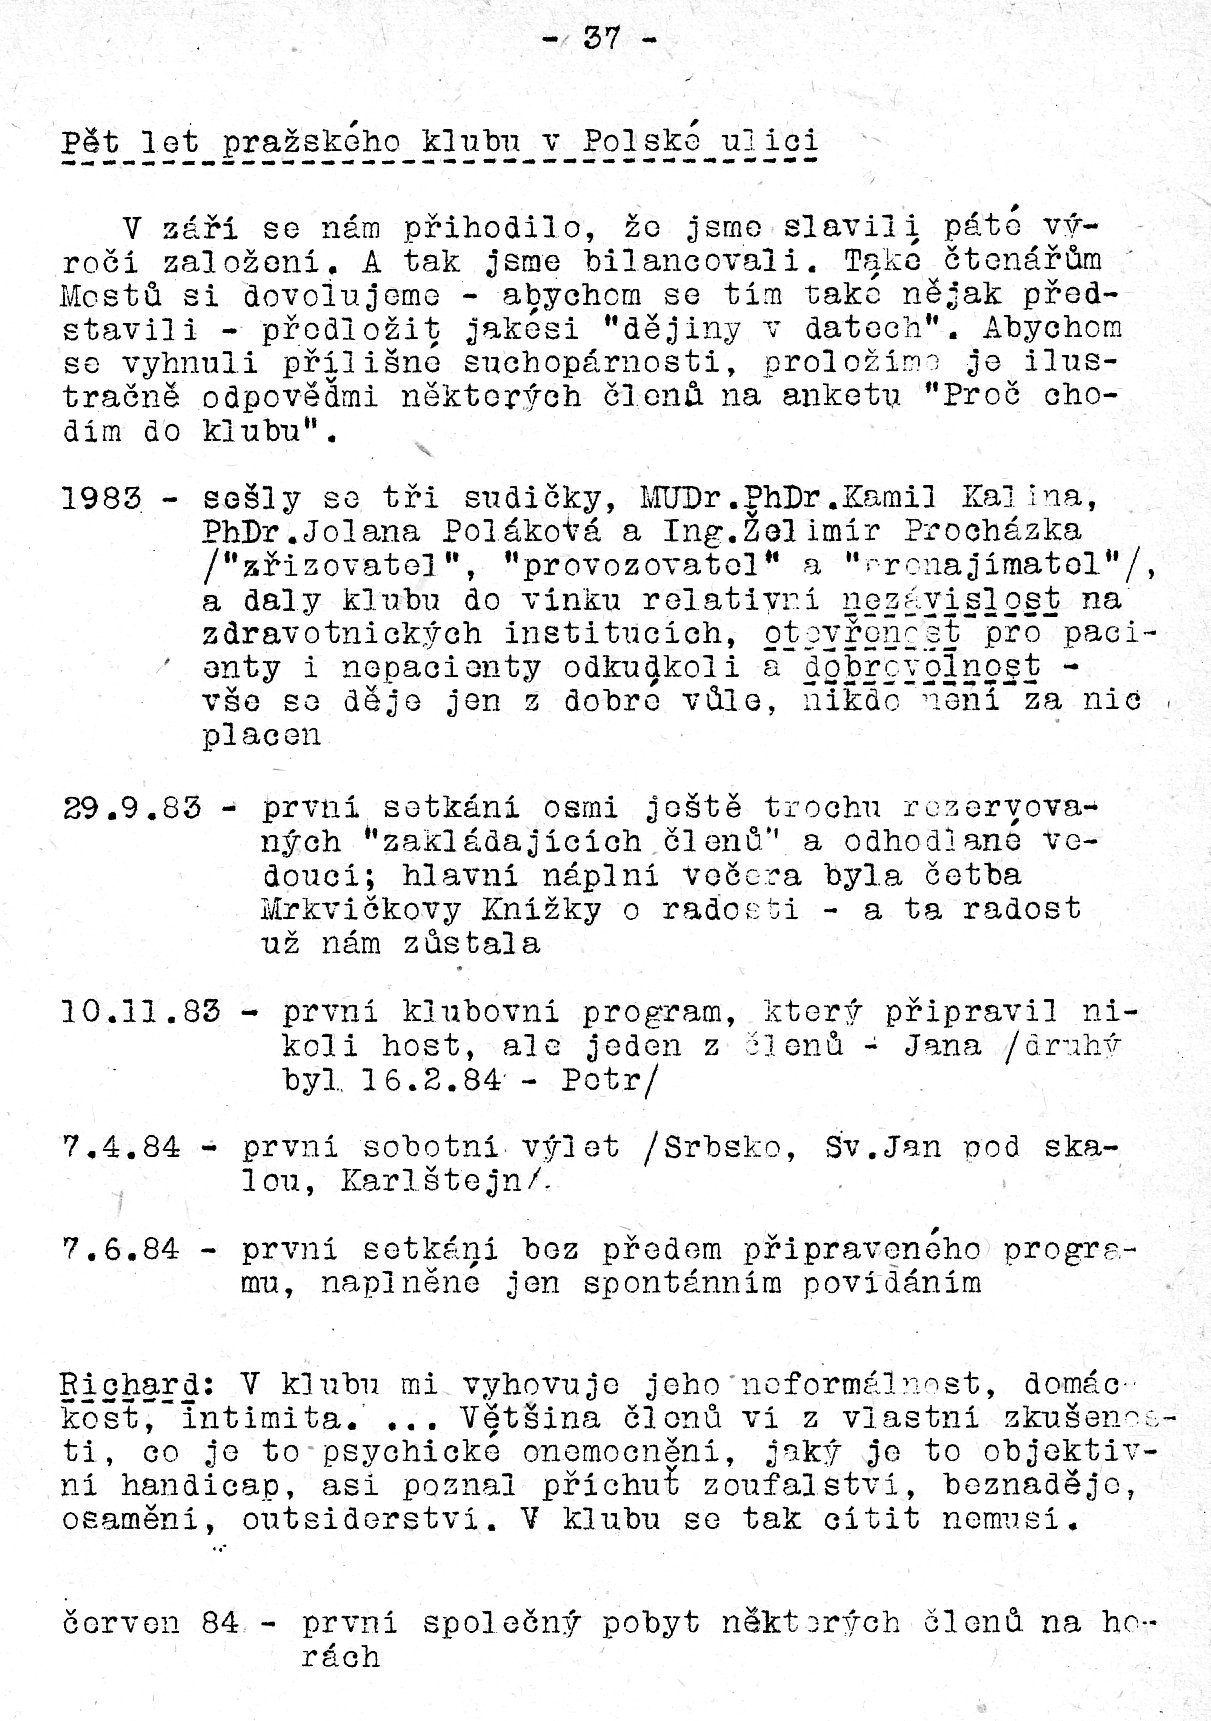 Kluby - strana 37 (časopis Mosty 1989/1)